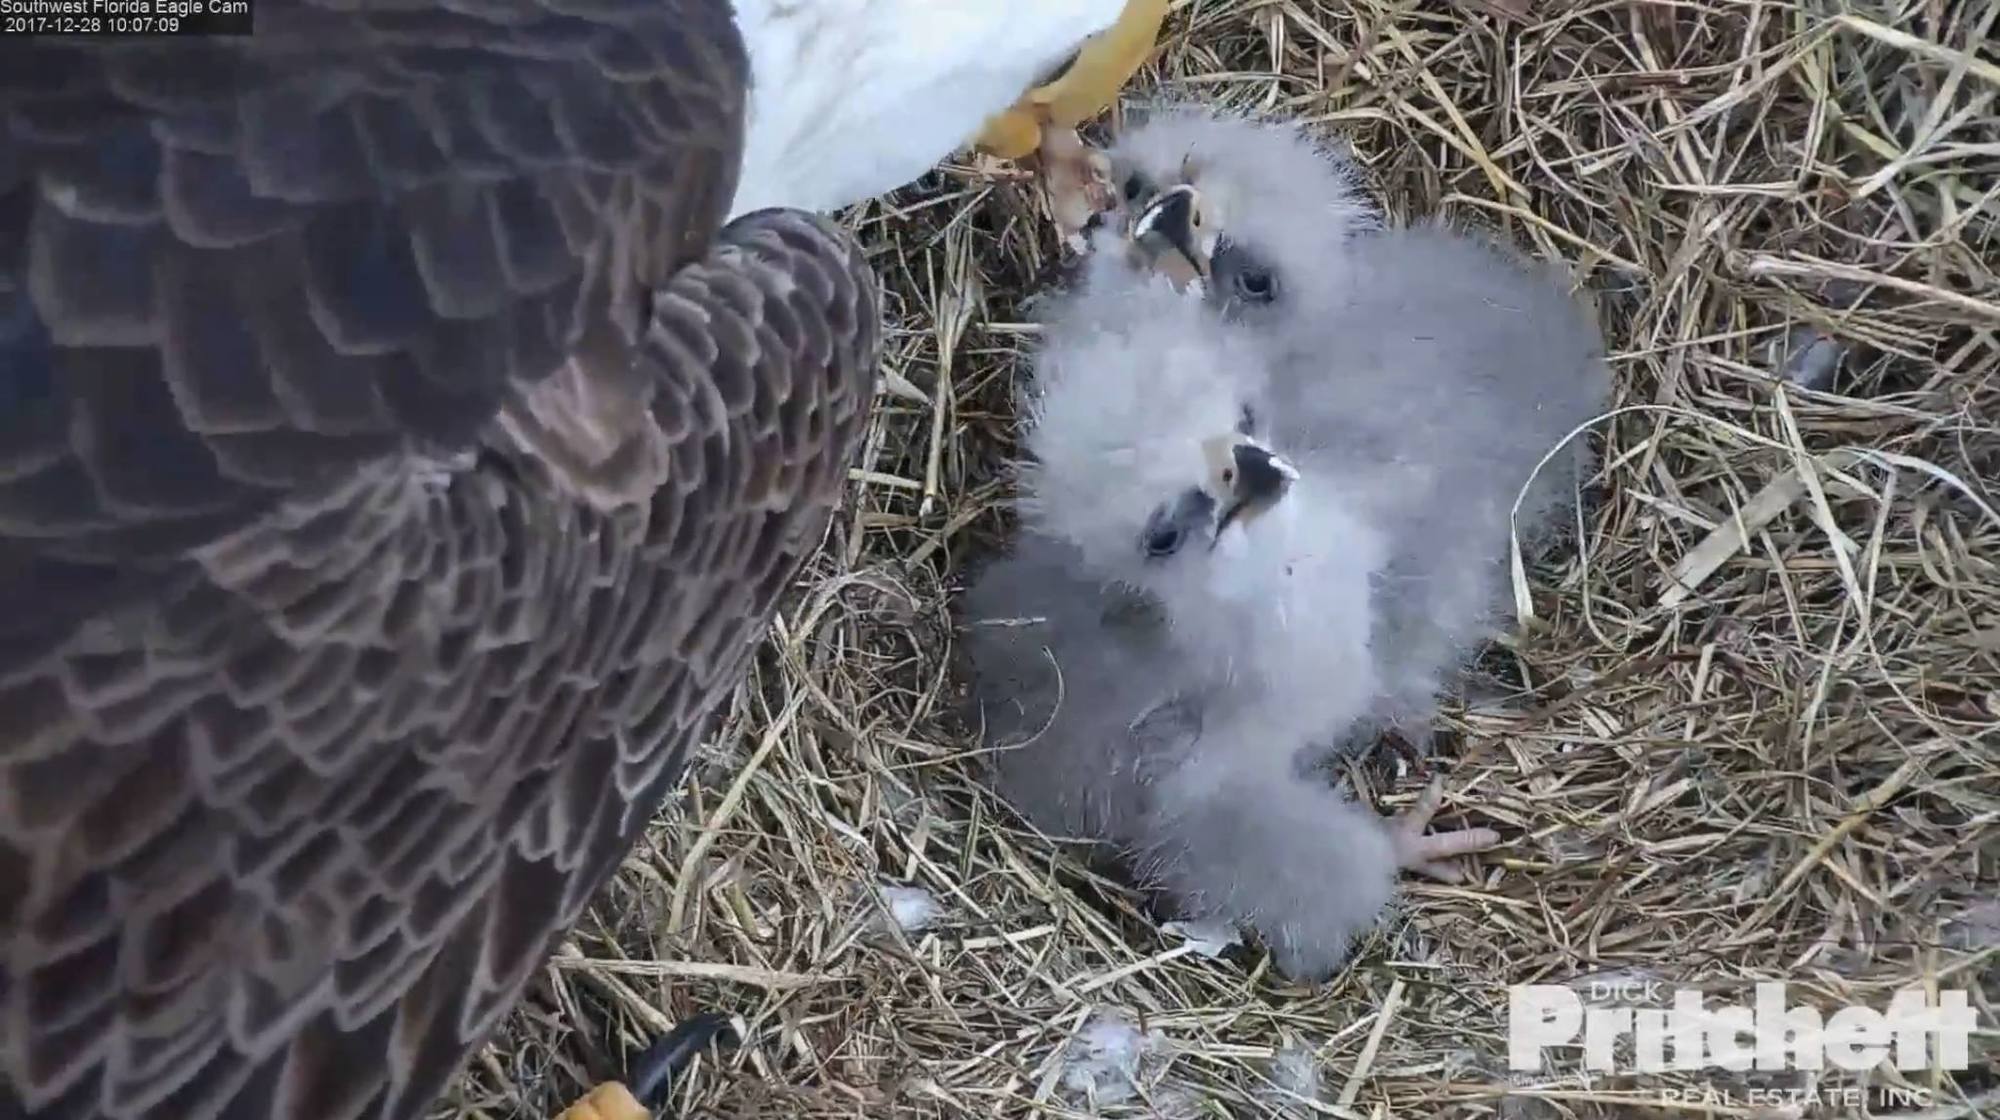 Florida nest cam captures hatching of 2 bald eagle babies - Orlando ...